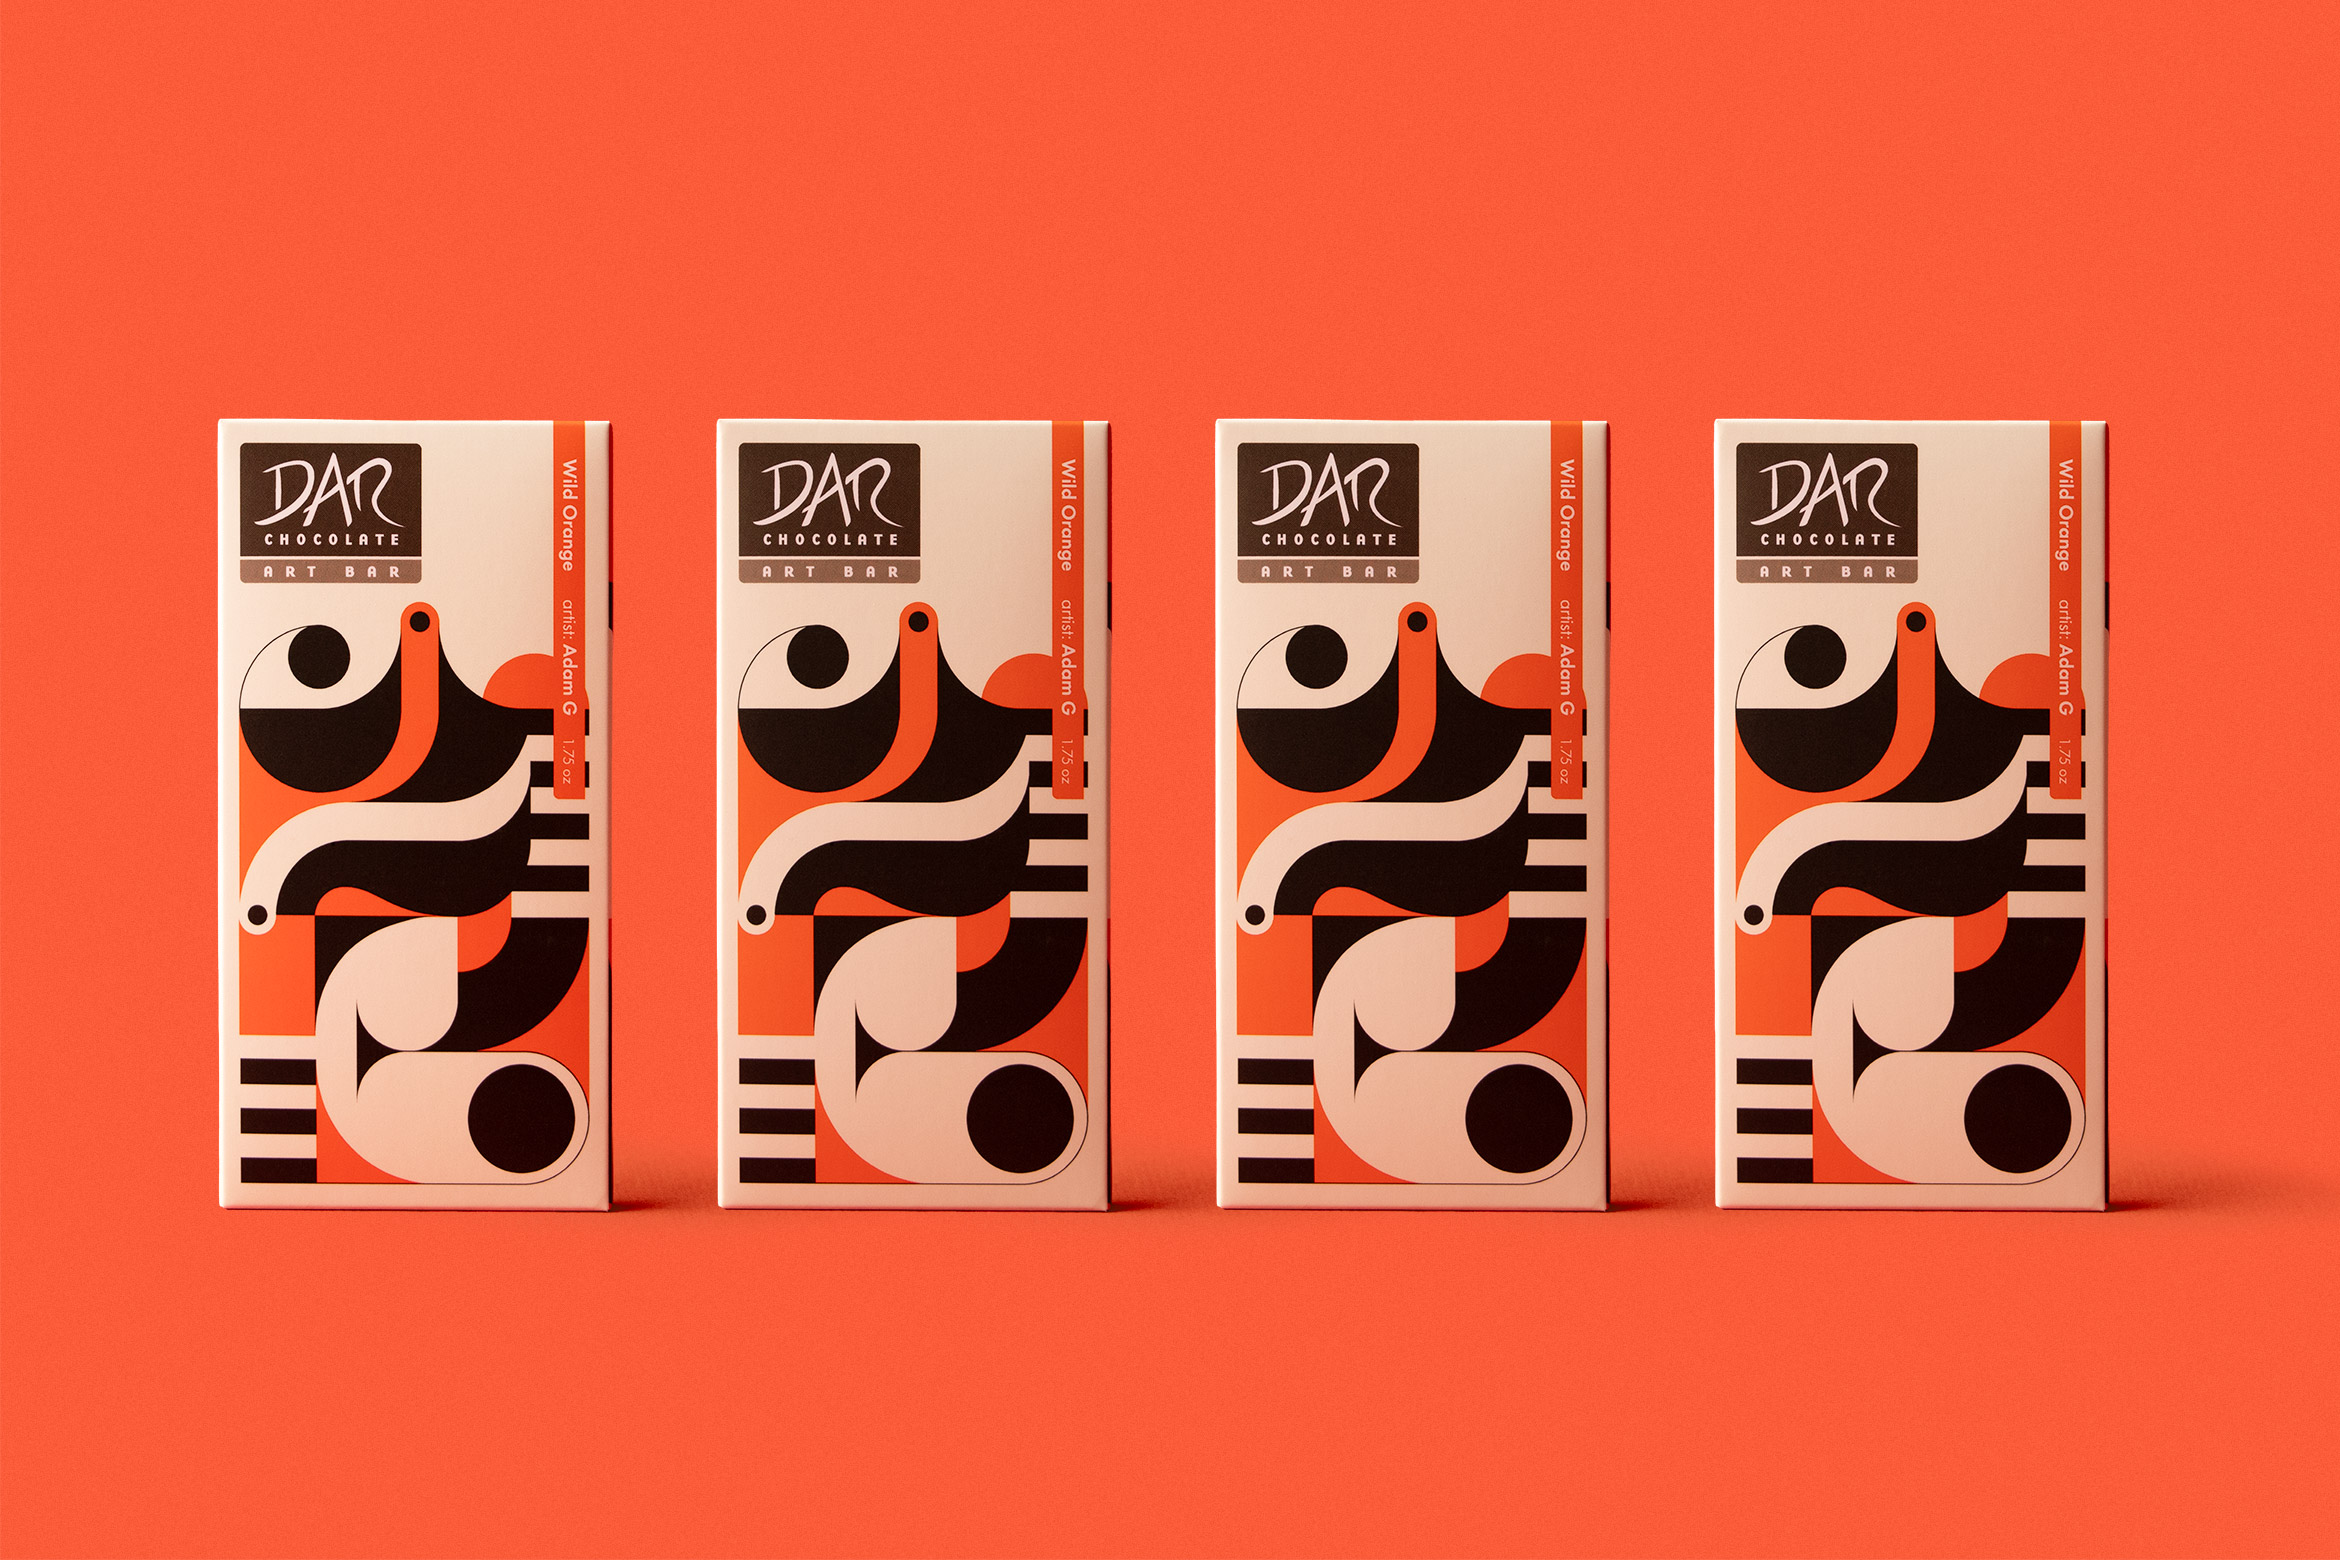 4 bars of DAR chocolate with black and orange illustration on packaging on orange background